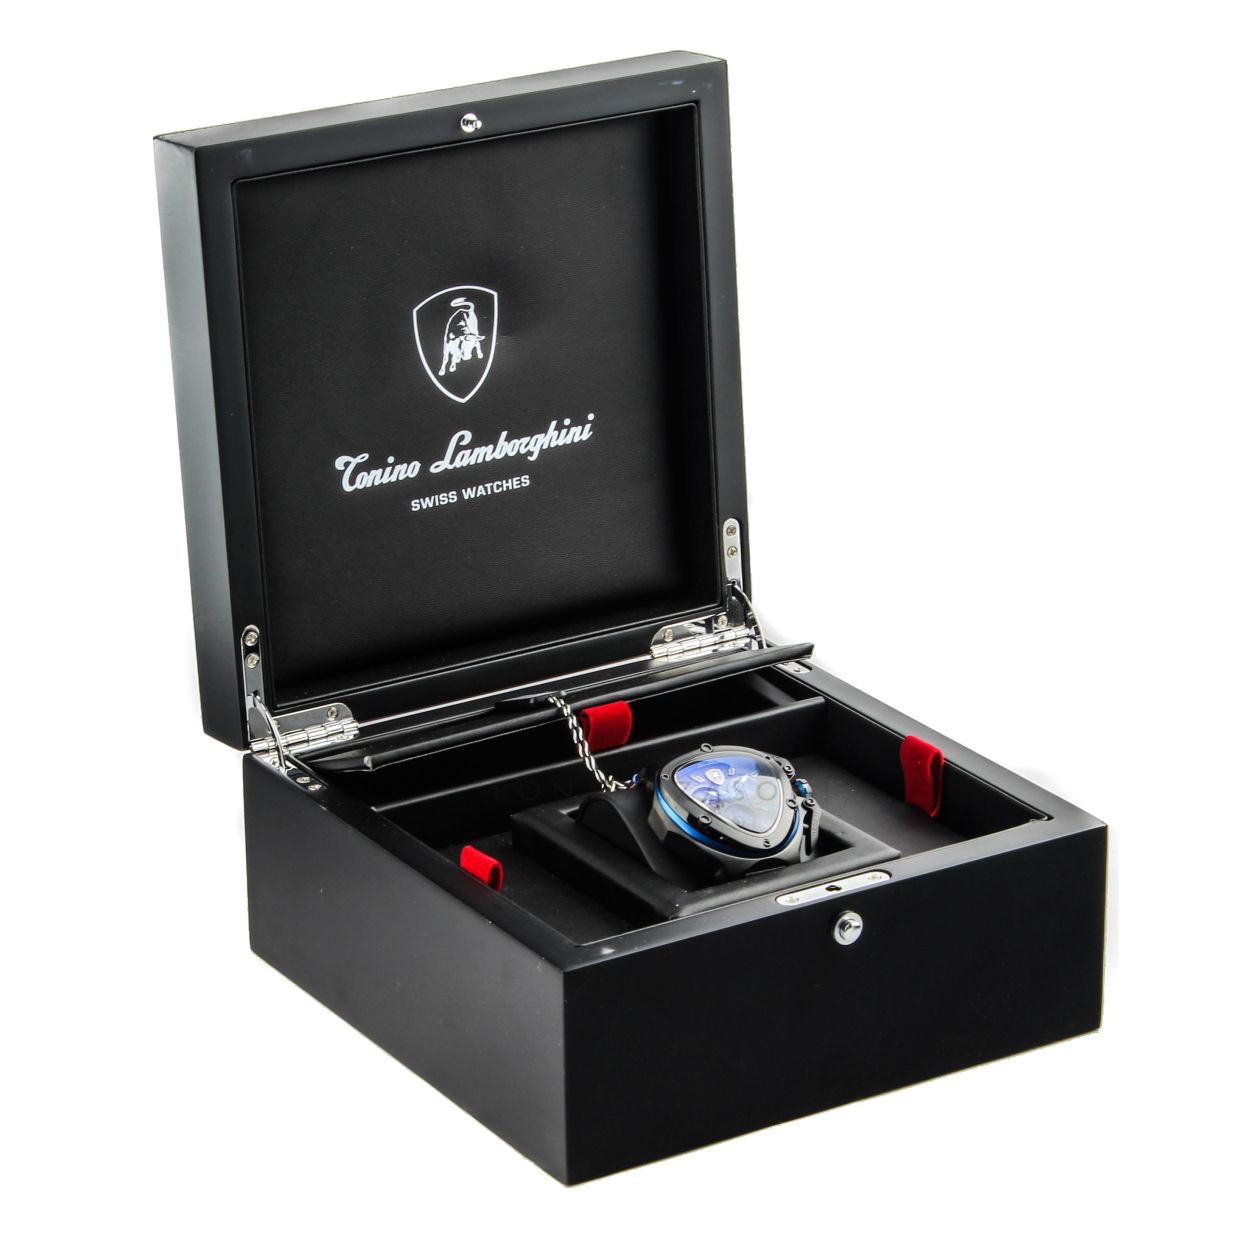 Zegarek męski Tonino Lamborghini T9GC + Dodatkowy pasek